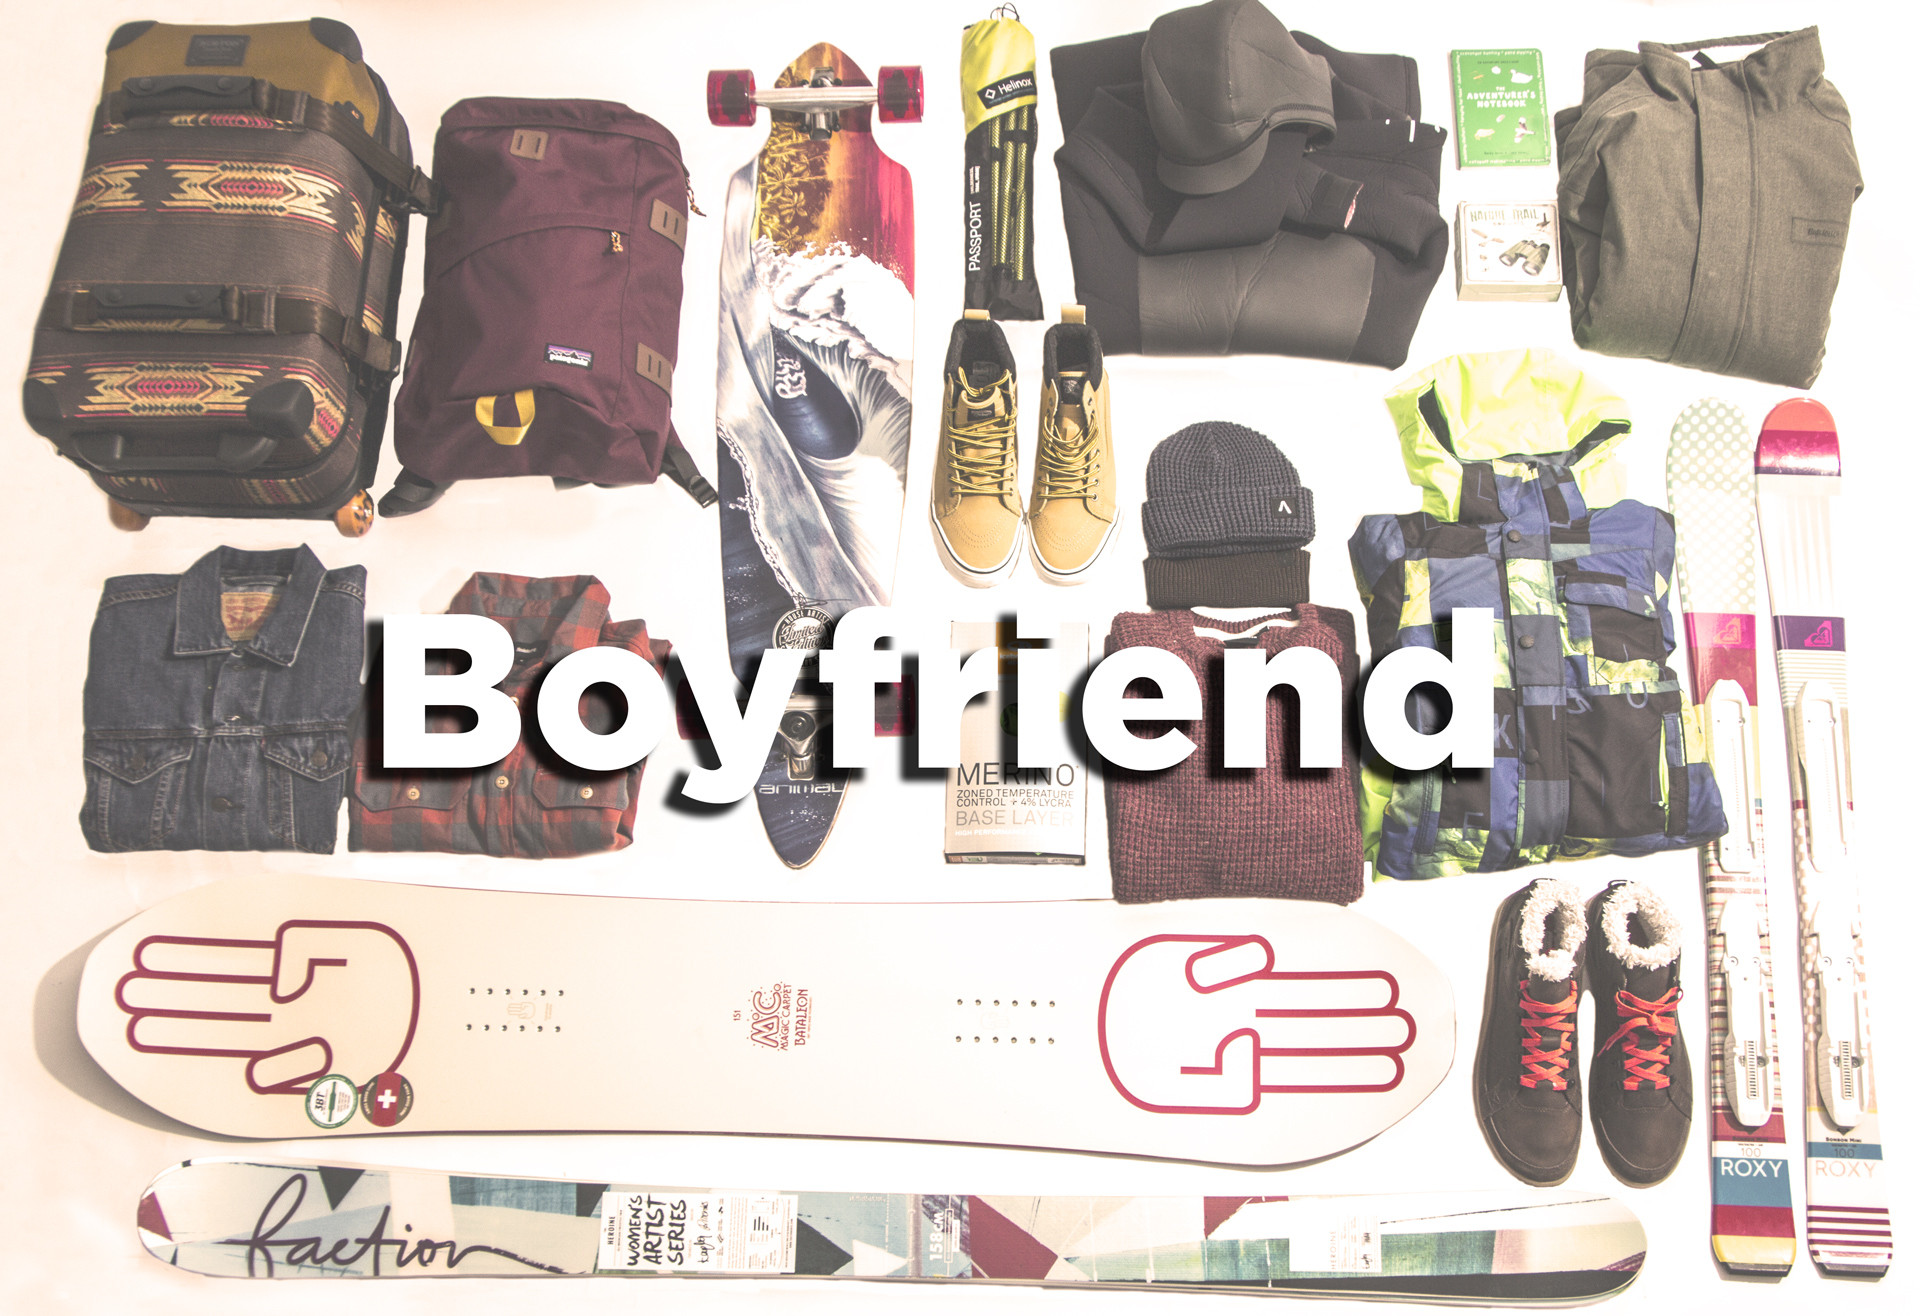 Boyfriend Xmas Gift Ideas
 Christmas Gift Ideas For A Boyfriend 15 Great Gifts